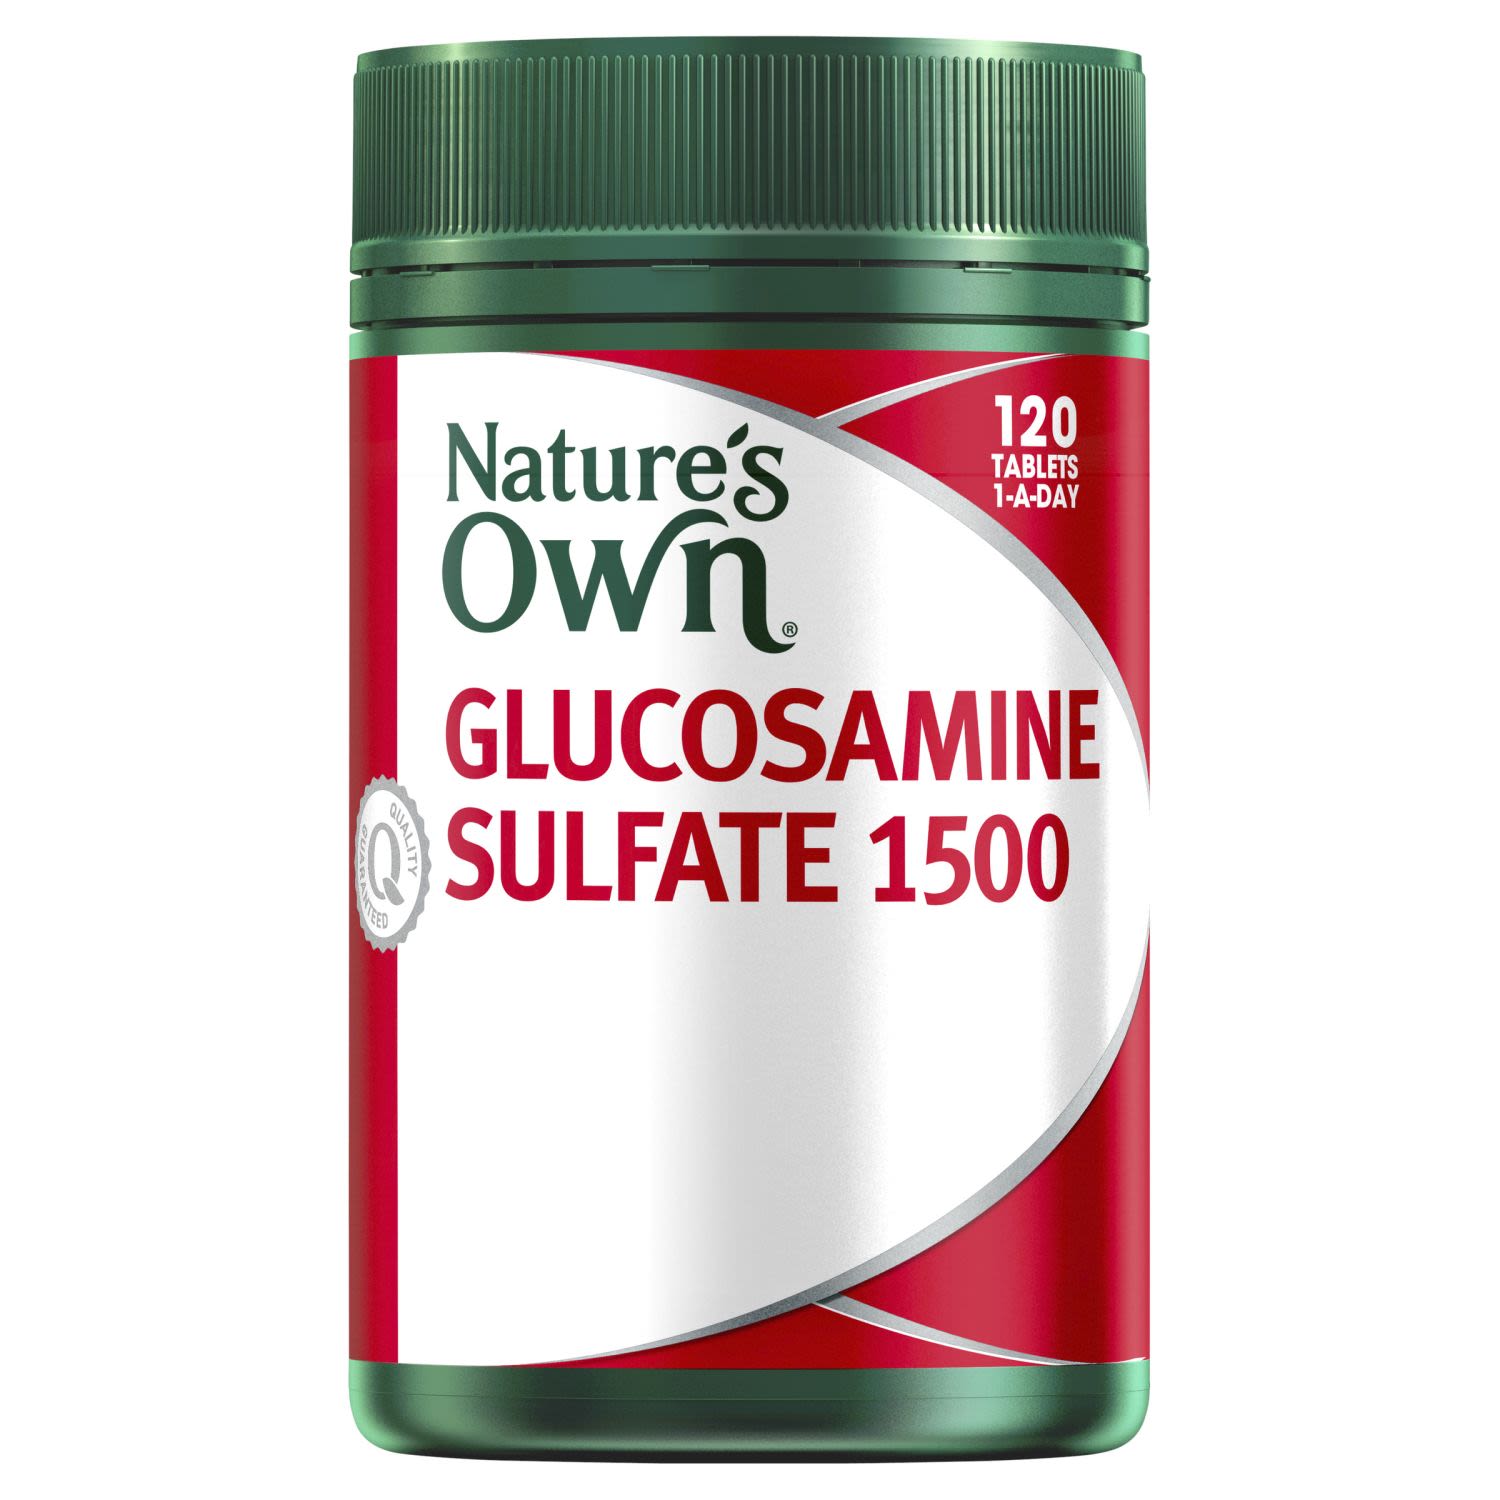 Nature's Own Glucosamine Sulfate, 120 Each